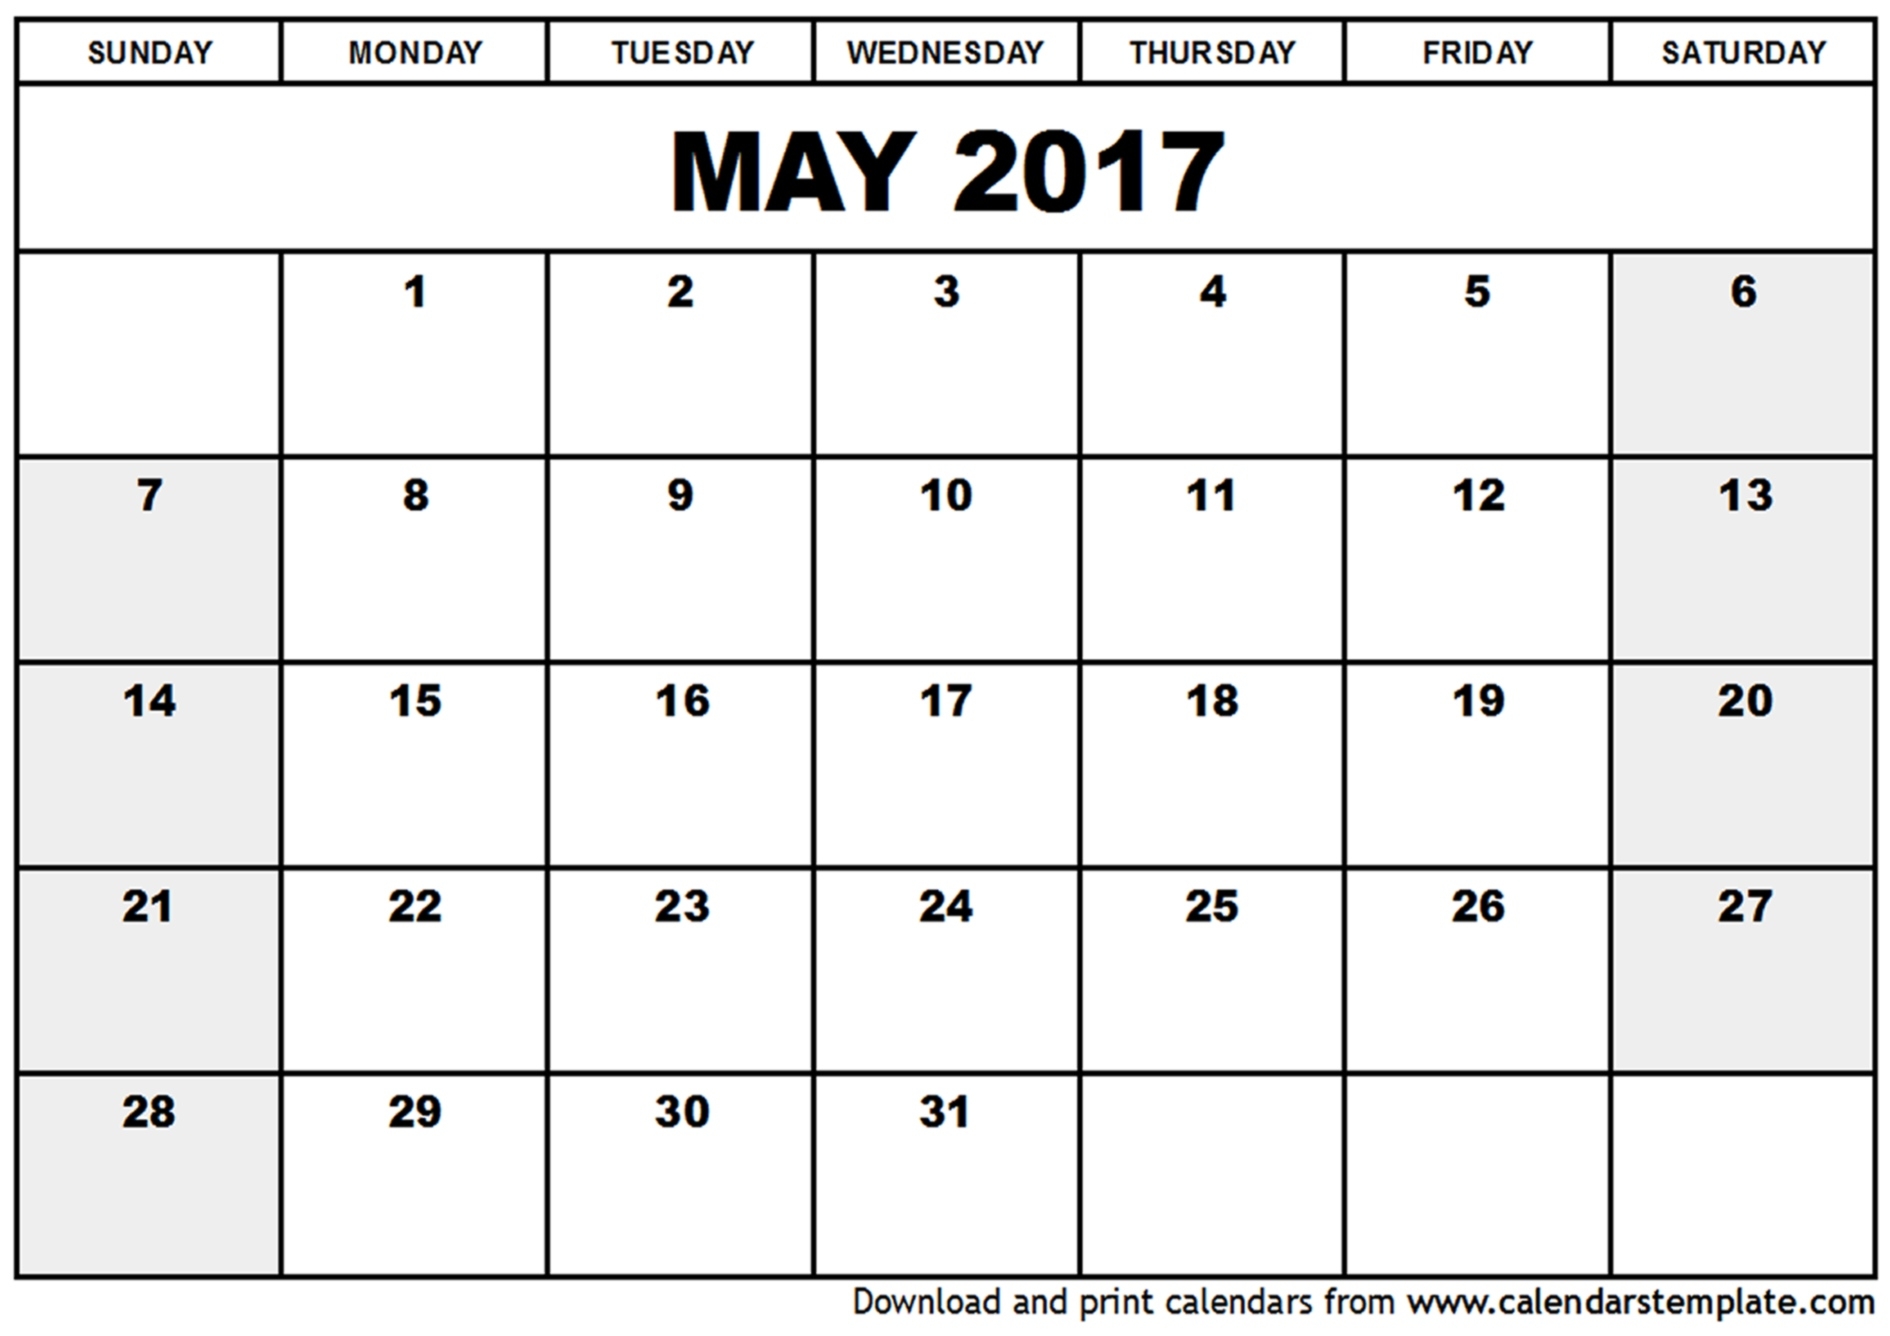 May 2017 Calendar Hong Kong 2 - Free Printable Calendar Impressive Free Printable Calendars Hong Kong